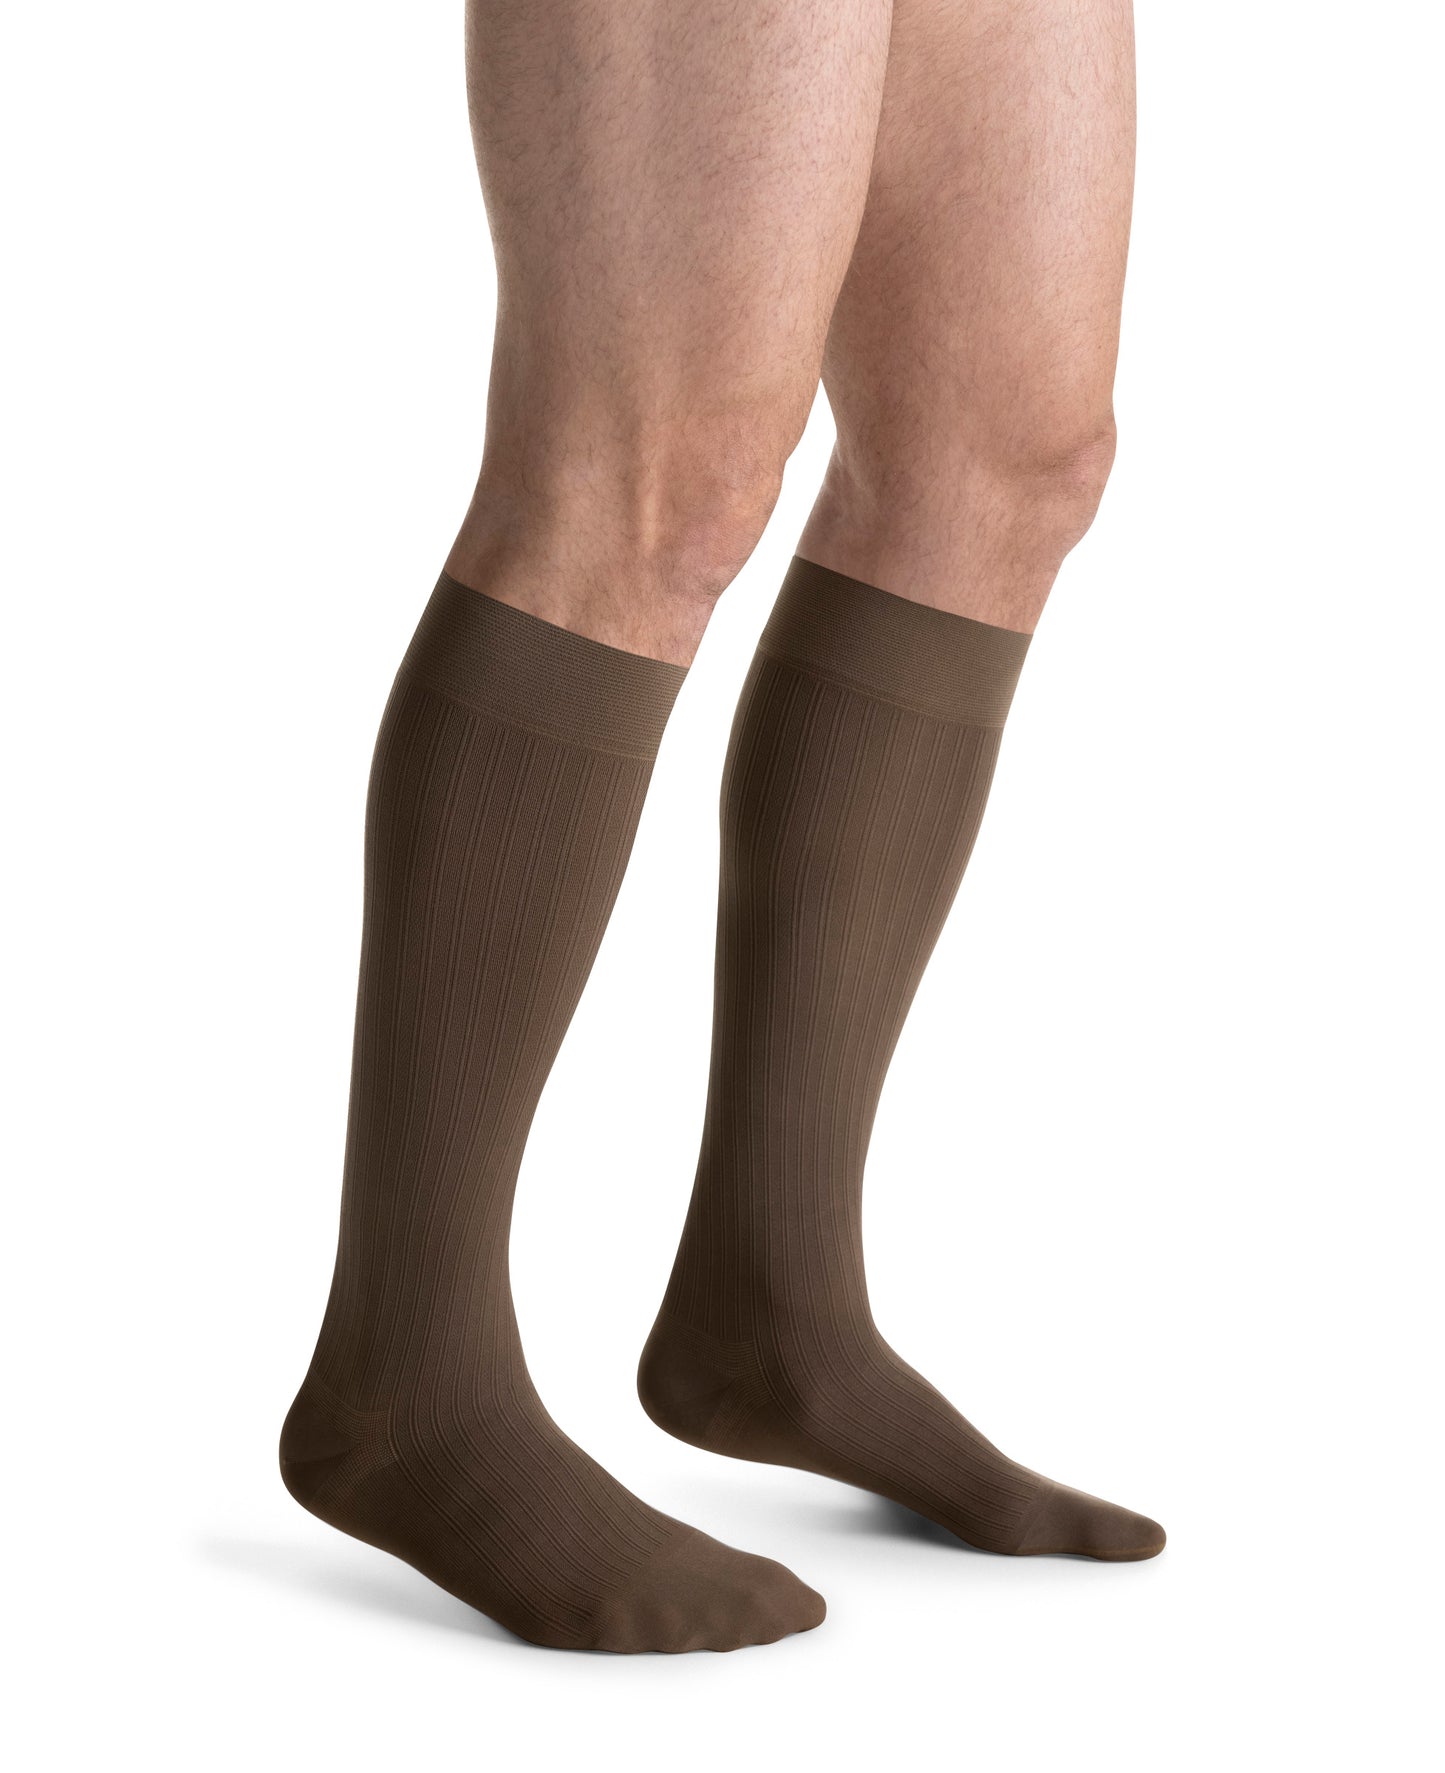 JOBST forMen Ambition Compression Socks 20-30 mmHg Knee High SoftFit Band Closed Toe